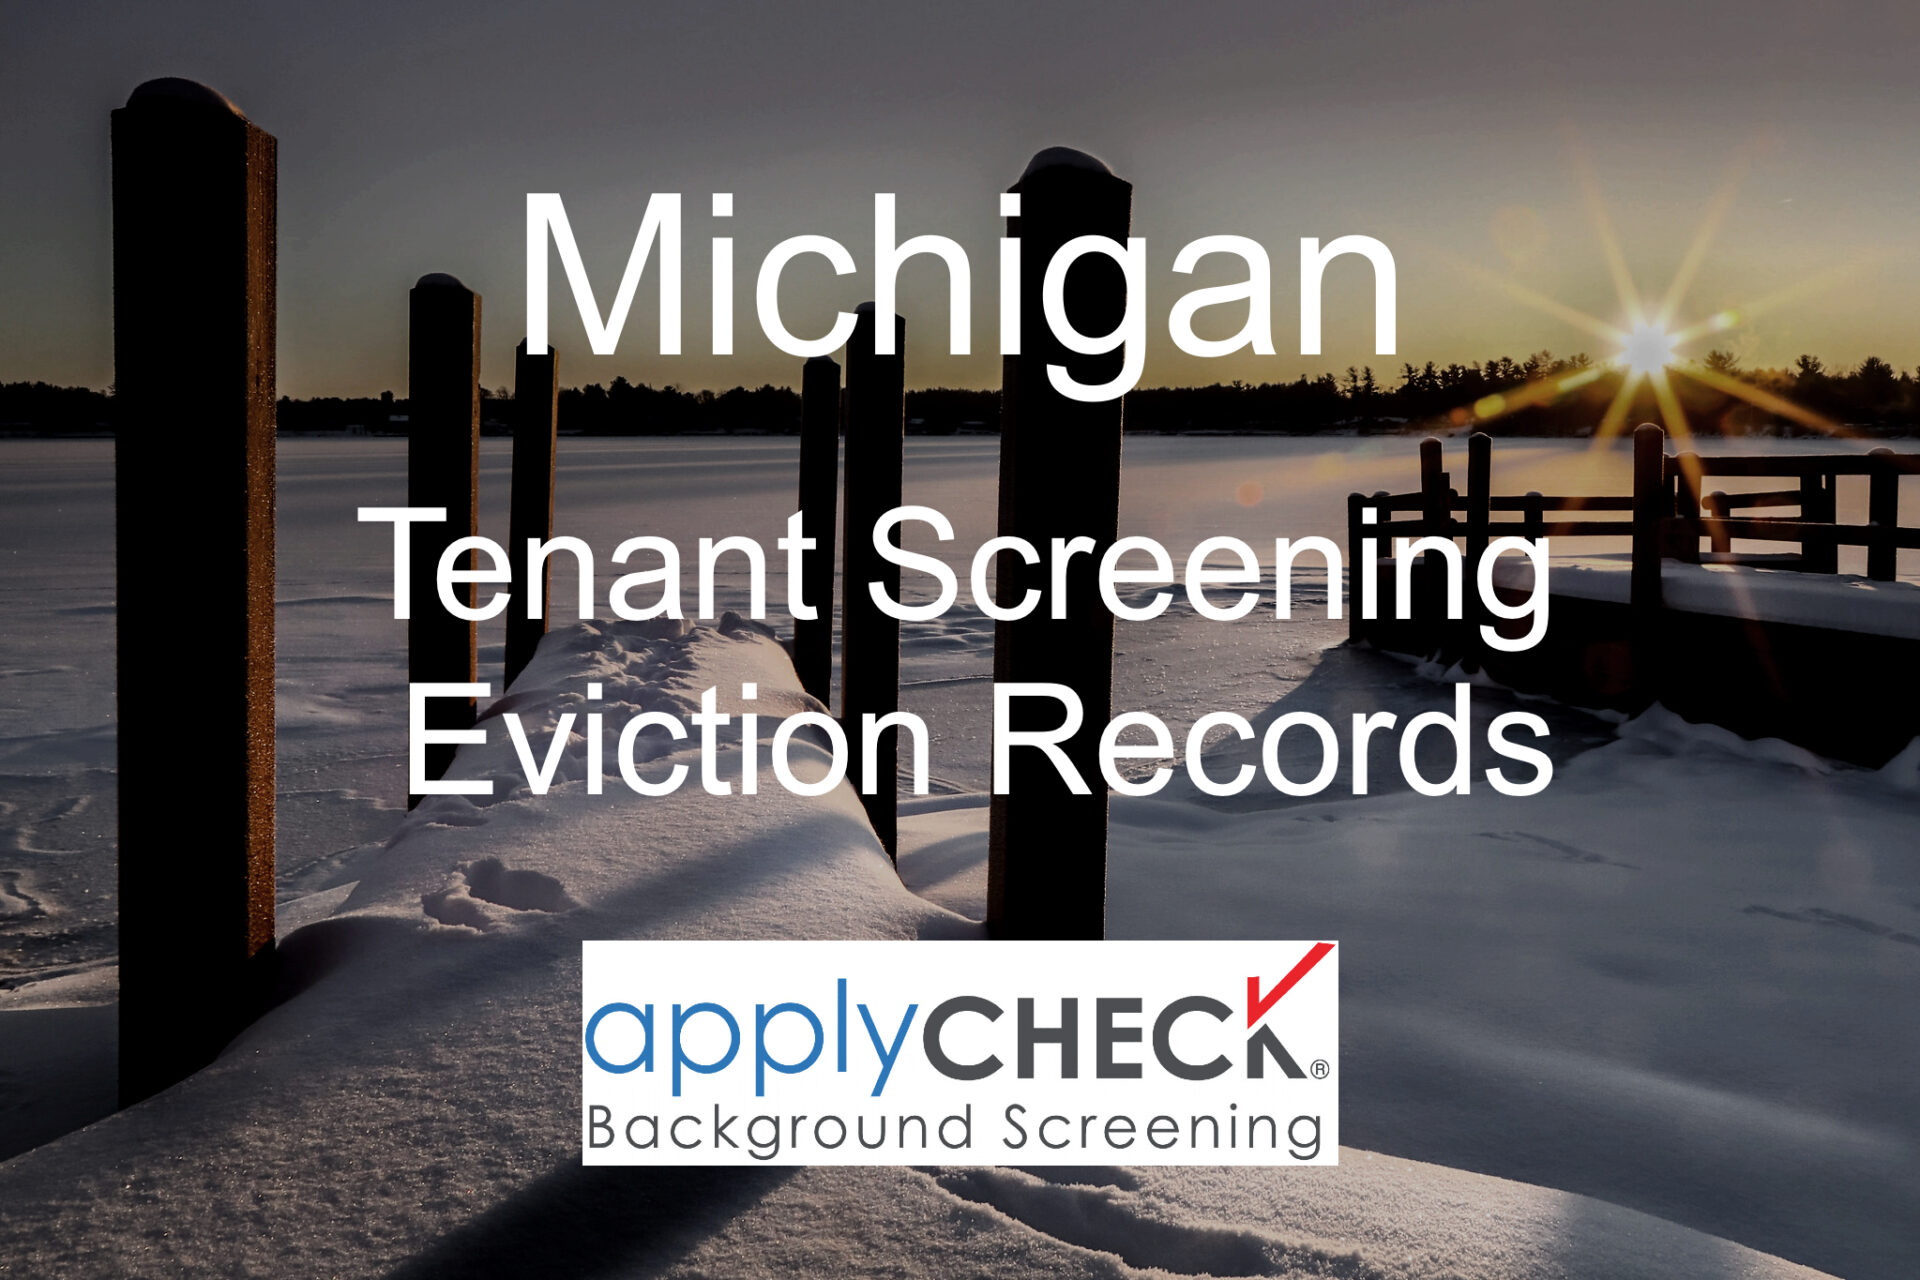 Michigan Tenant Screening and Eviction image